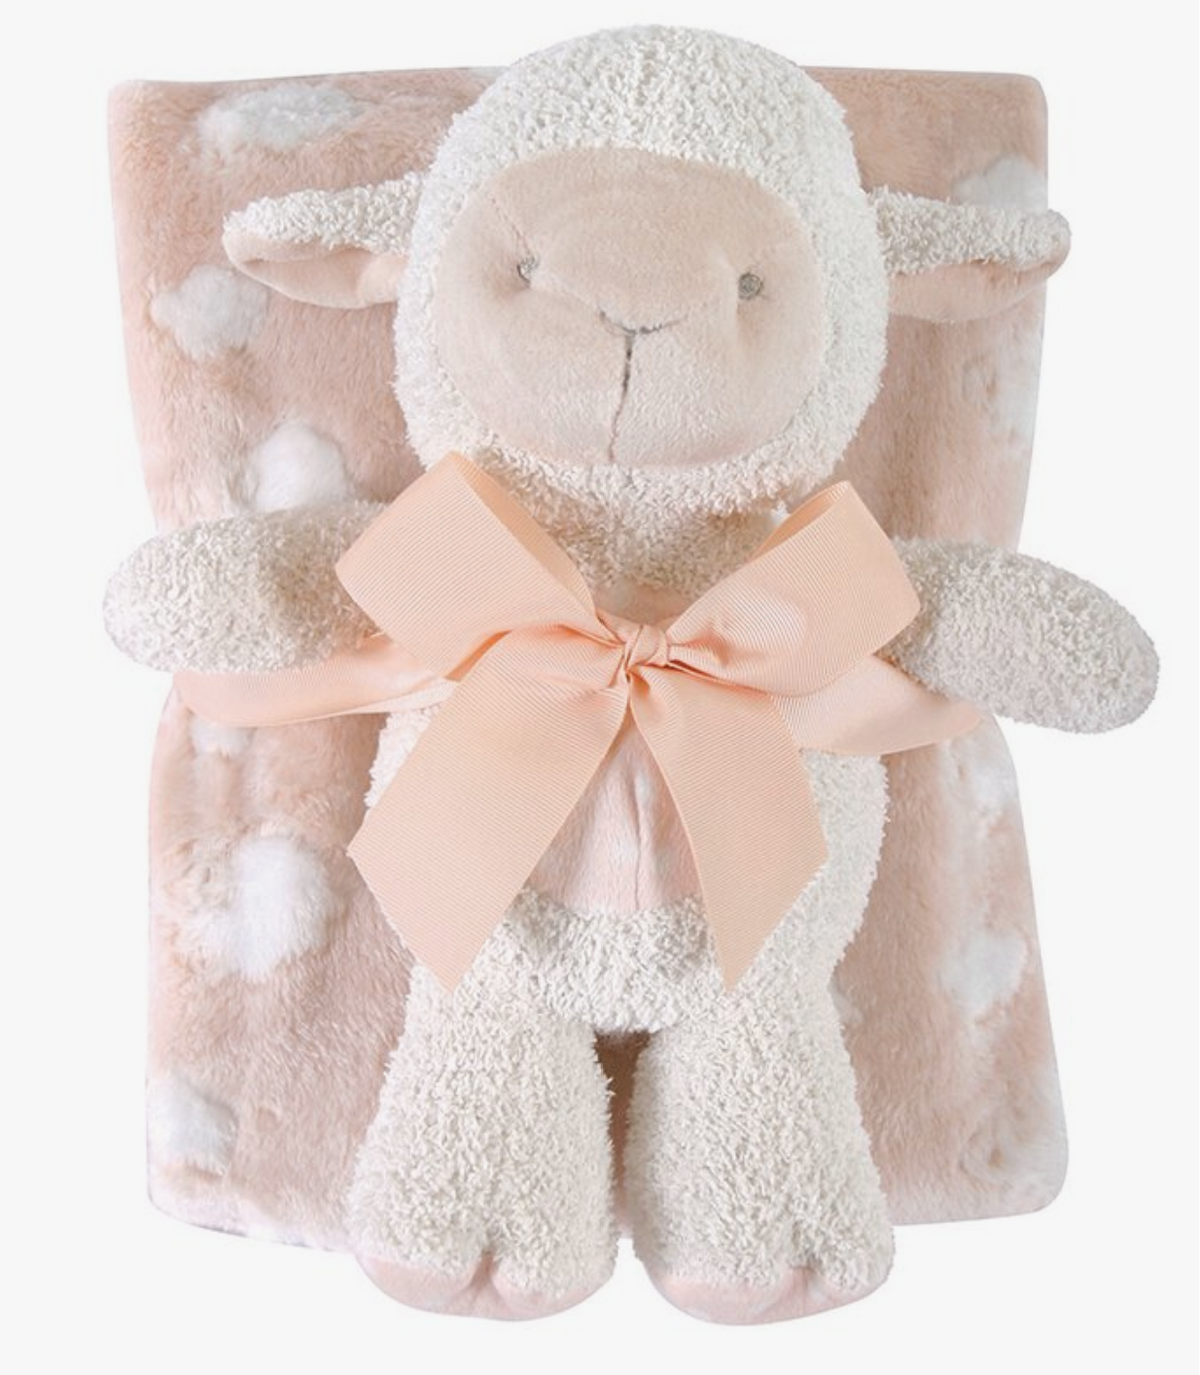 Blanket Toy Set - Blue Lamb, Pink Lamb & Gray